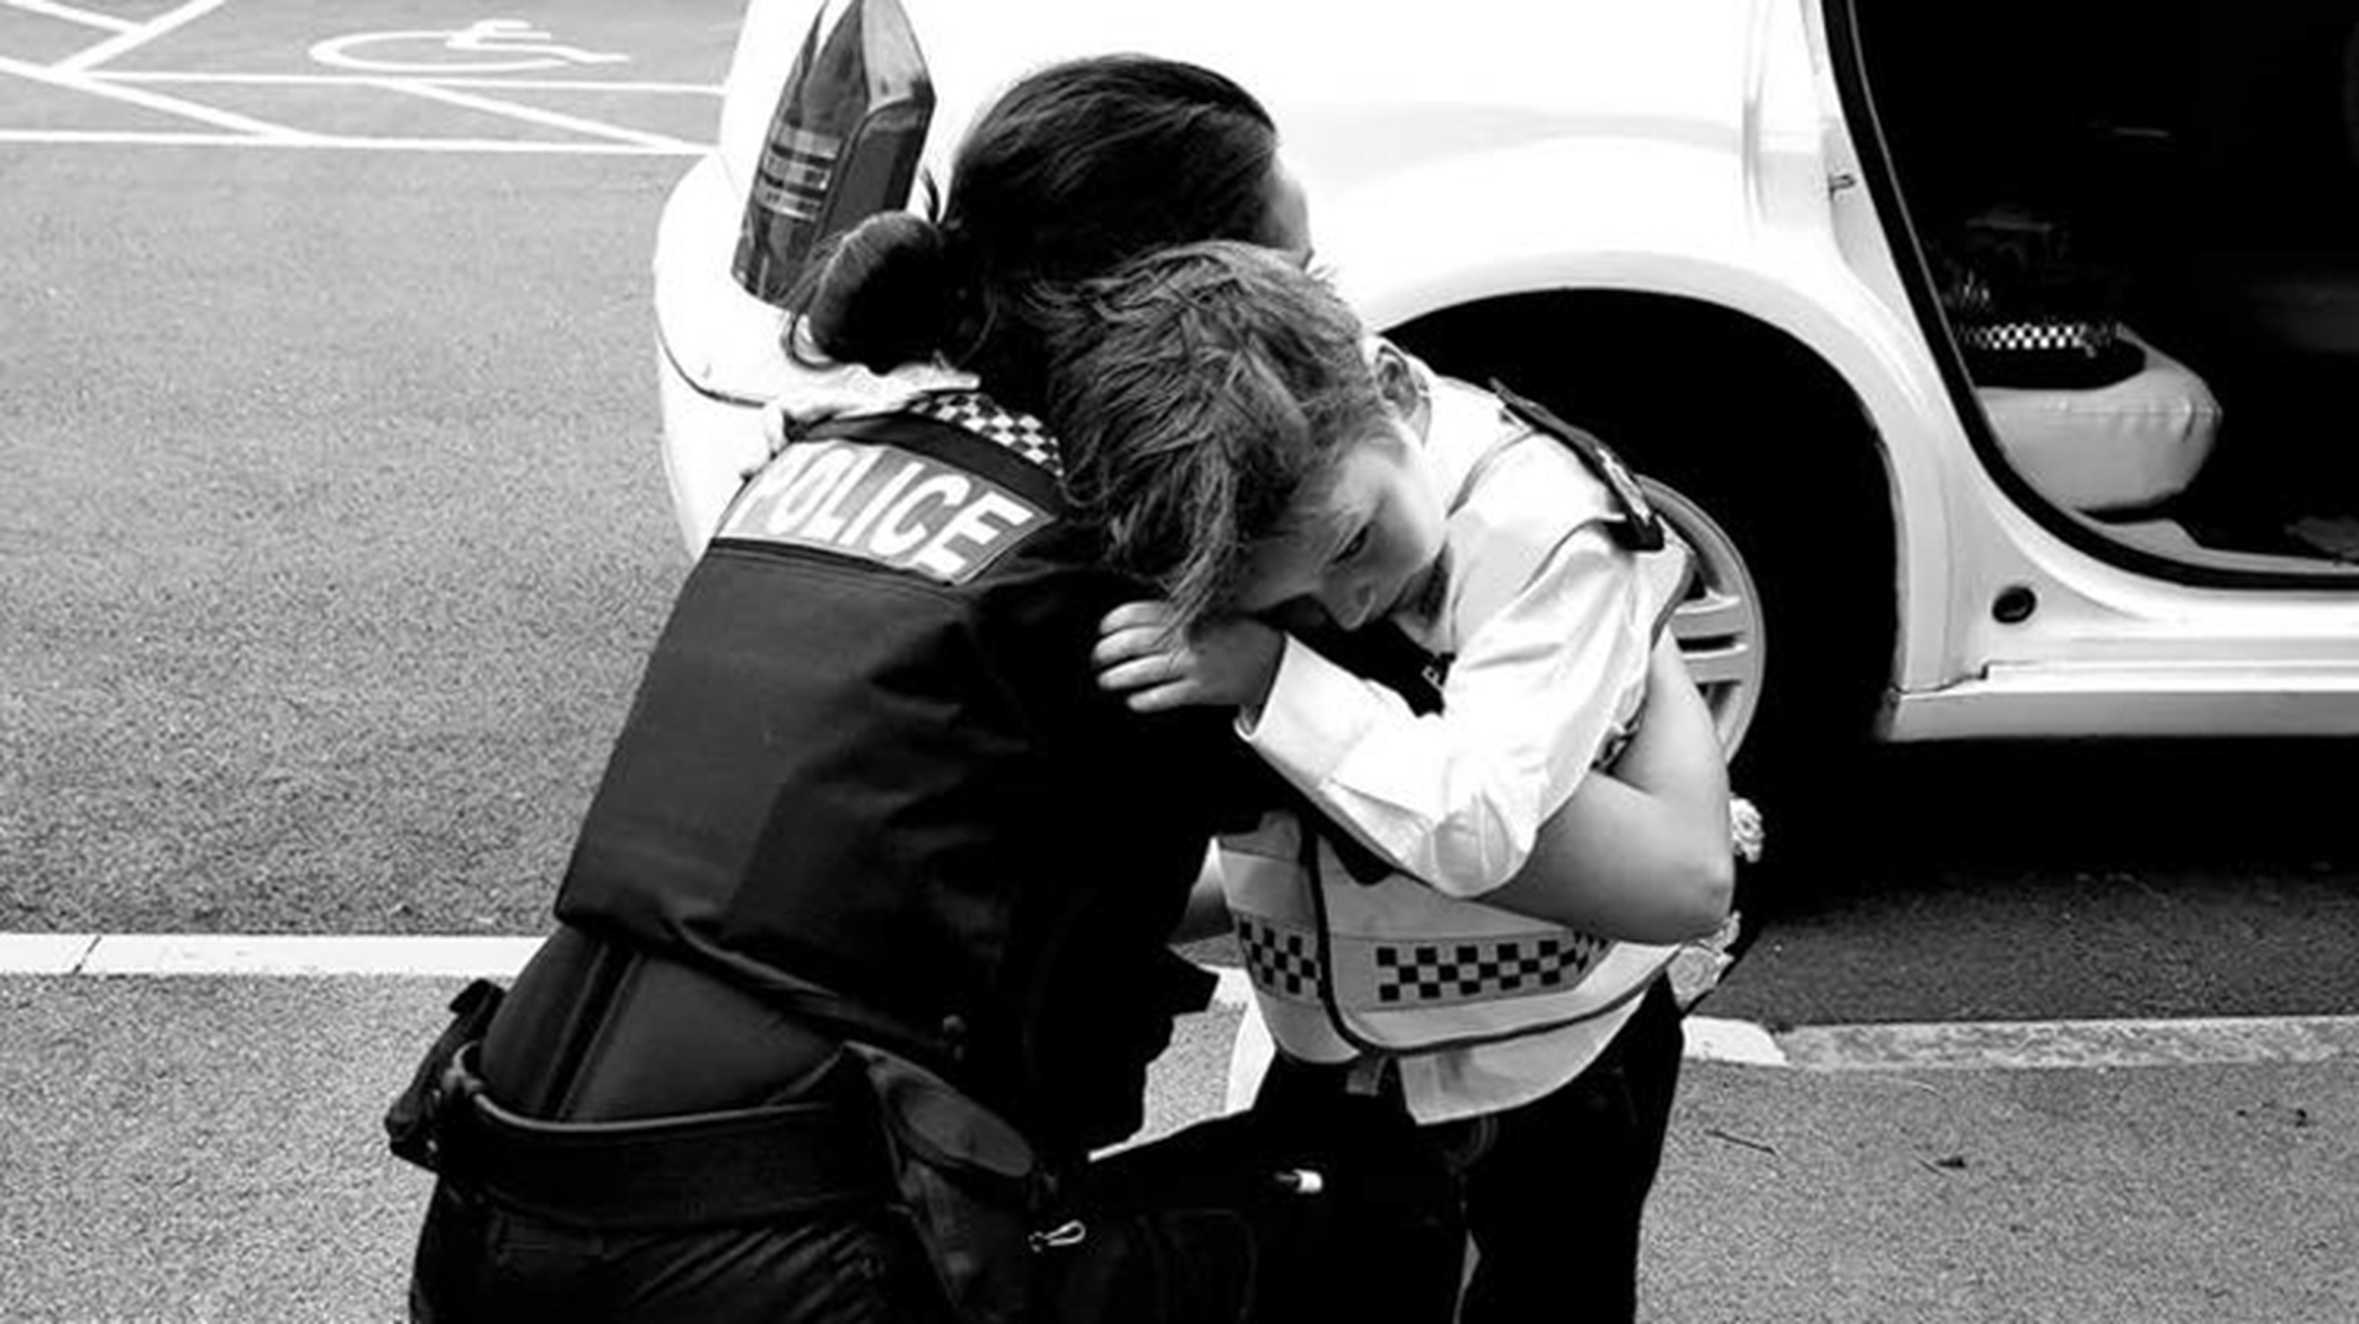 Danny hugging a female police officer